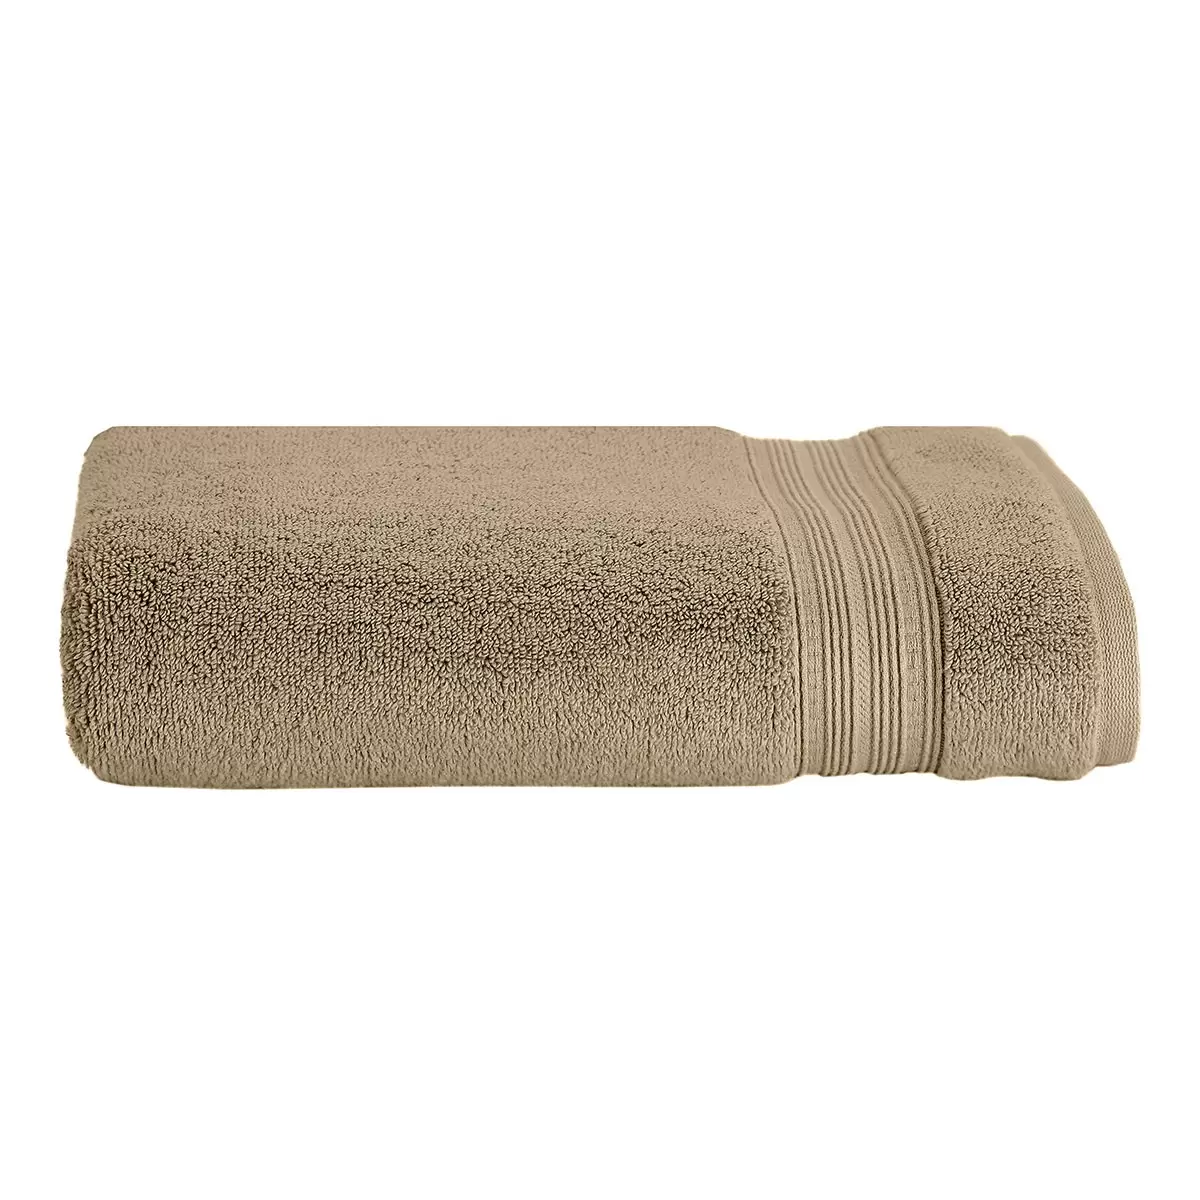 Grandeur 印度低捻純棉加大浴巾 88公分 X 177 公分 灰褐色